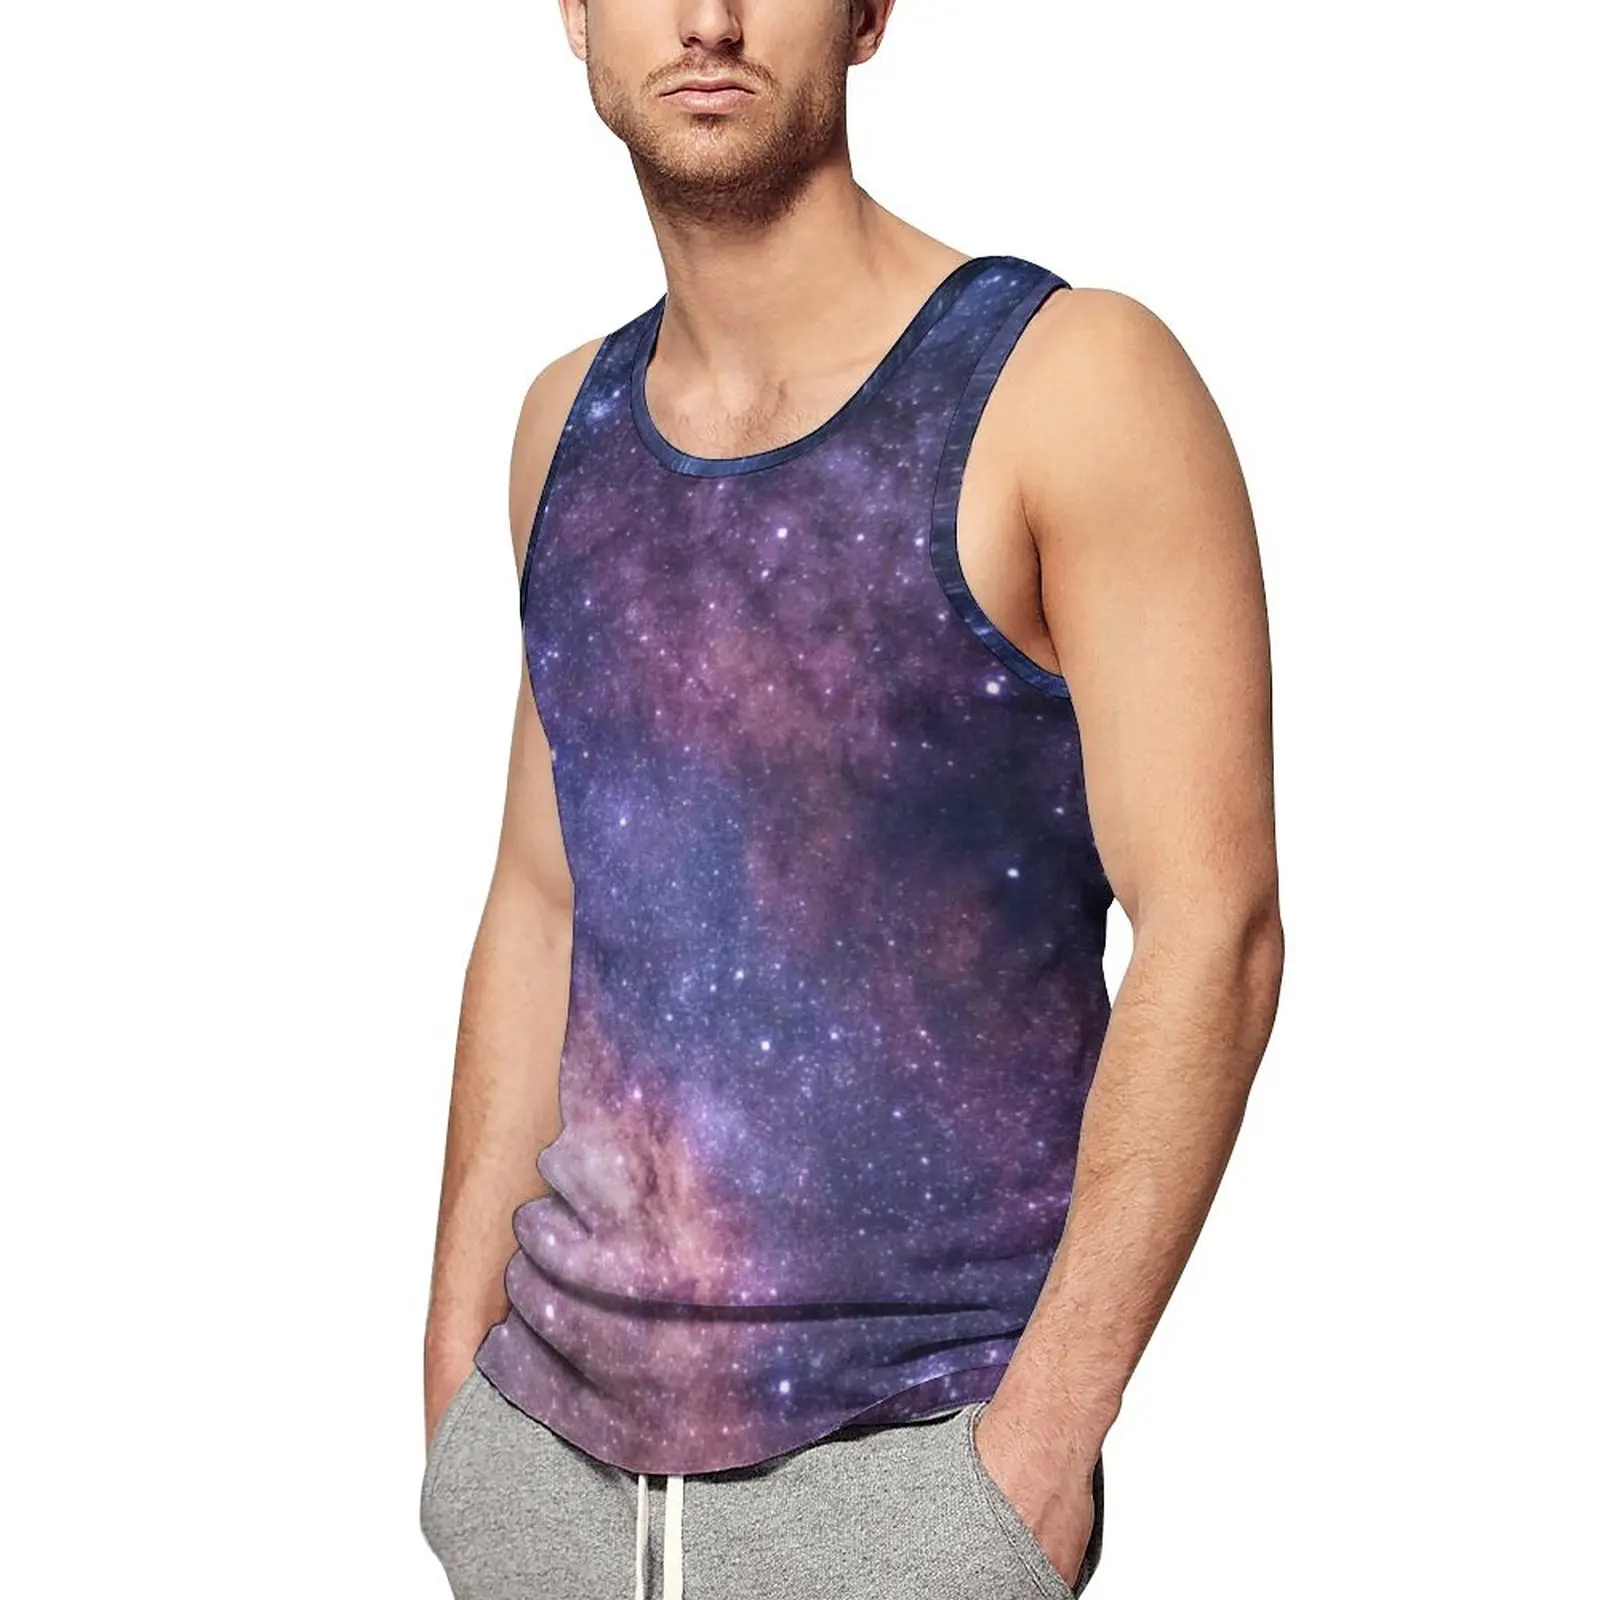 

Galaxy Star Print Tank Top Nebula Planets Stars Fashion Tops Summer Gym Males Pattern Sleeveless Vests Large Size 4XL 5XL